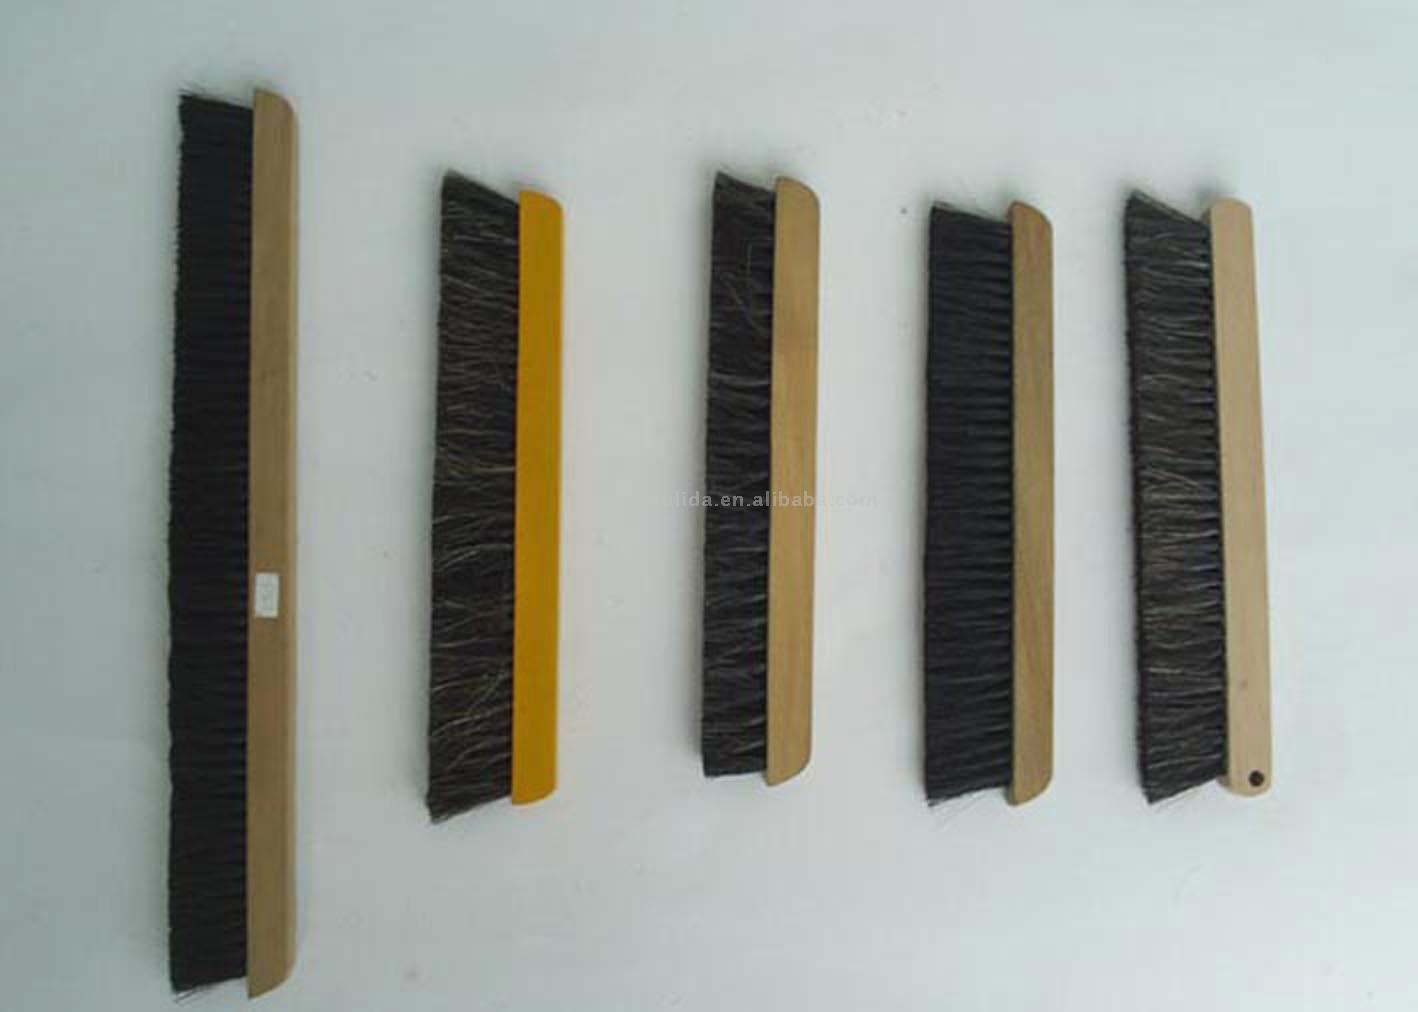 Wallpaper Brush Product Details From Yangzhou